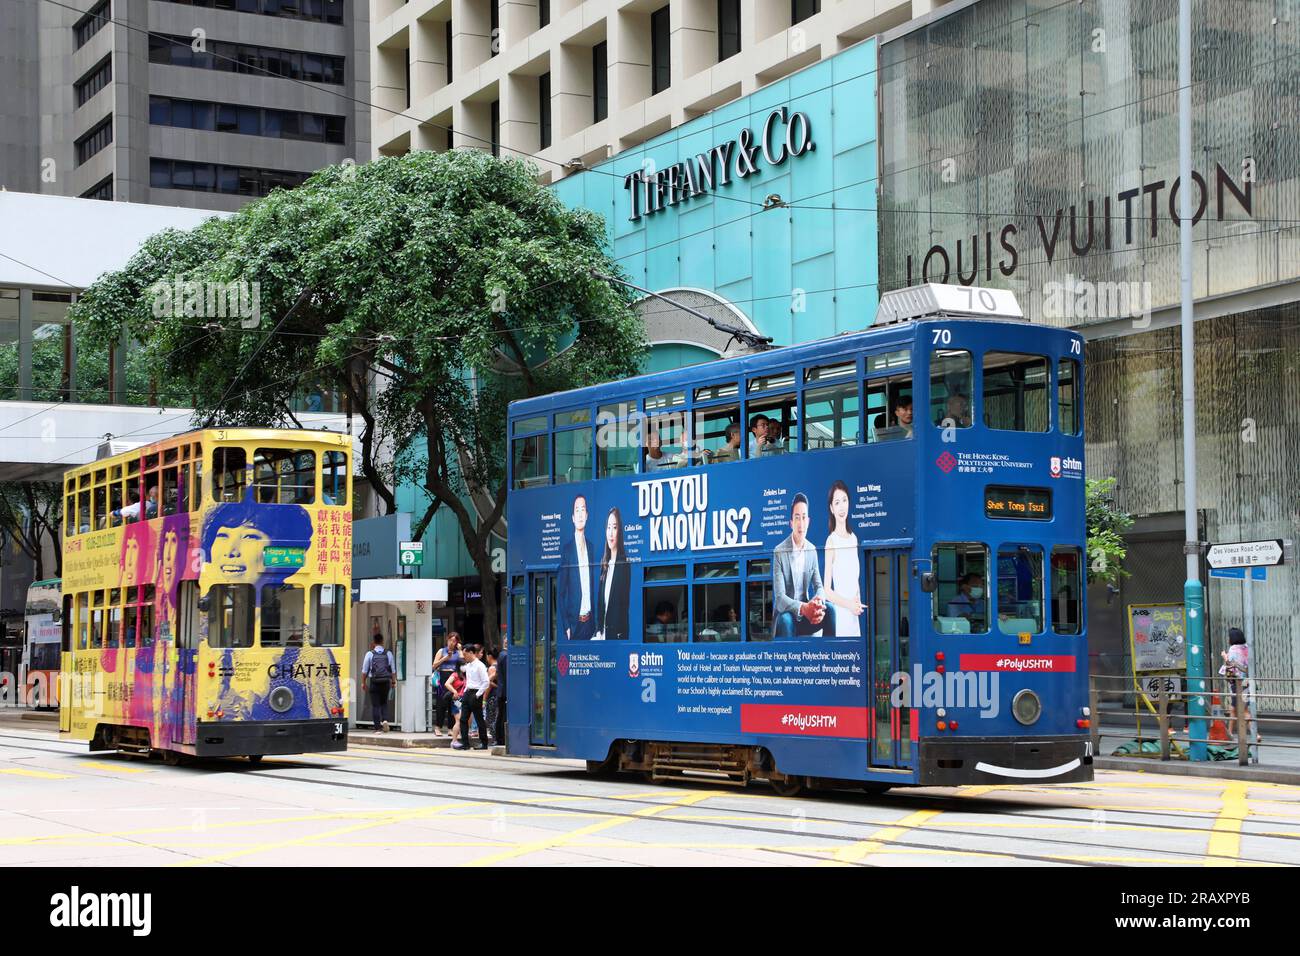 Traditionelle Straßenbahnen in Zentral, Hongkong, China Stockfoto